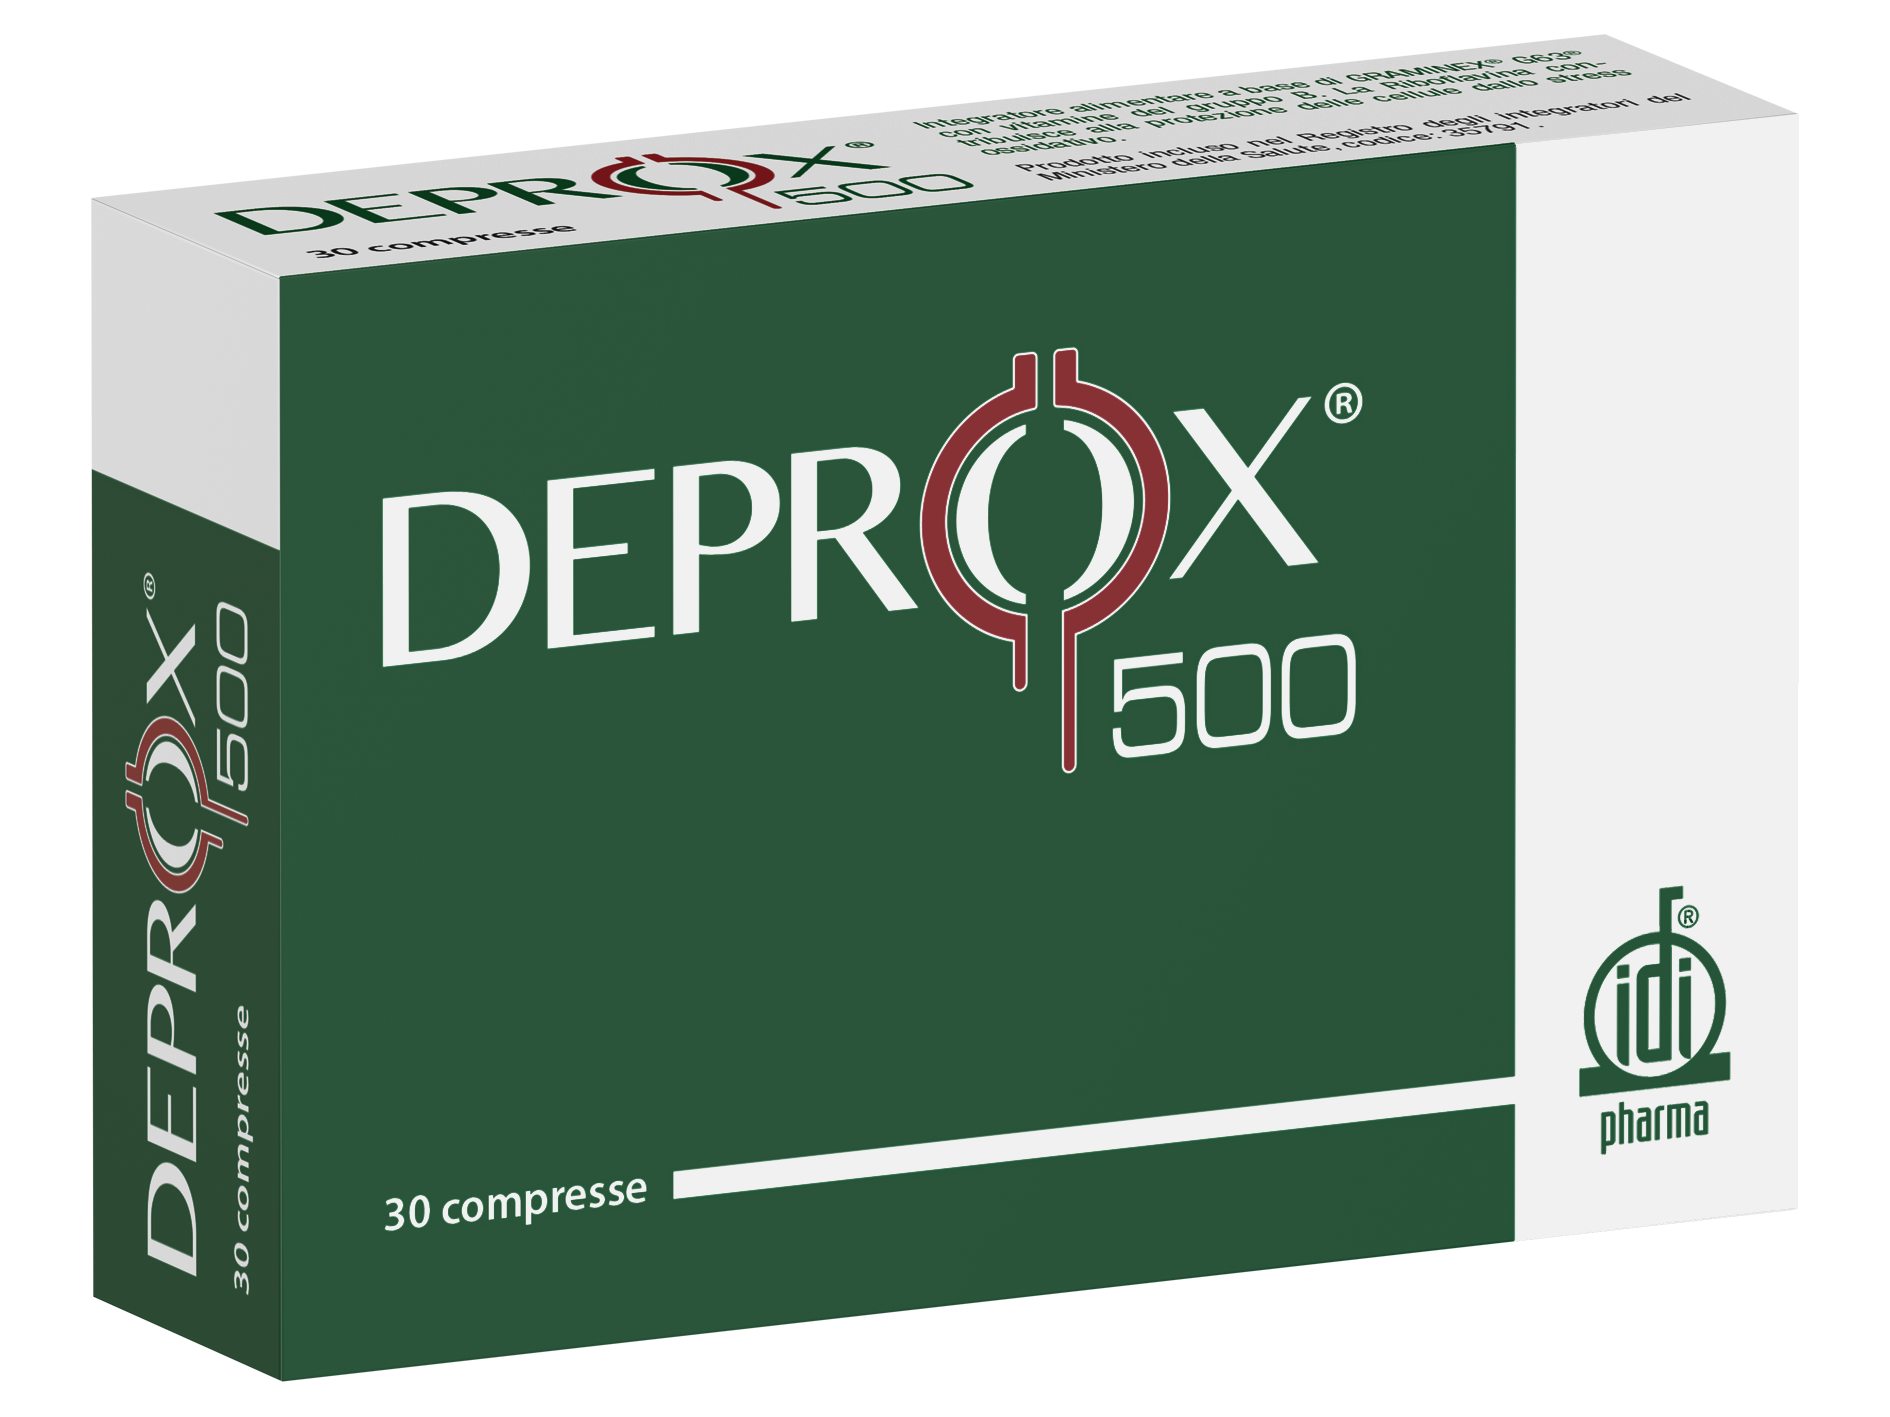 DEPROX 500